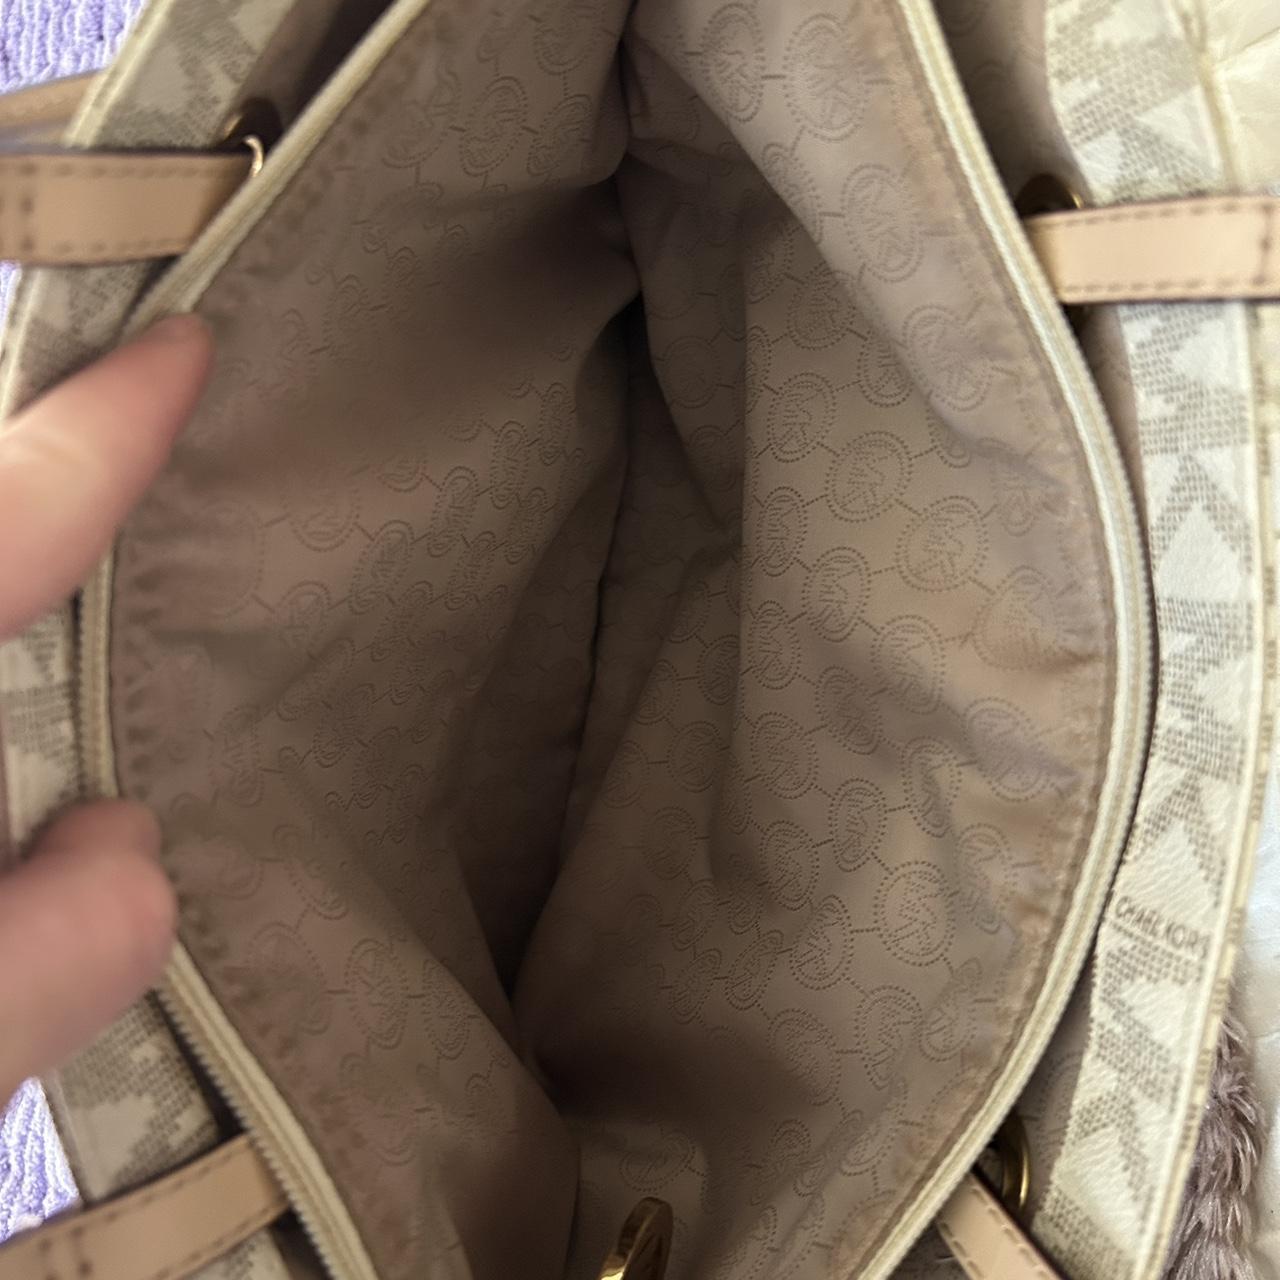 Authentic Michael Kors speedy bag. Great condition - Depop